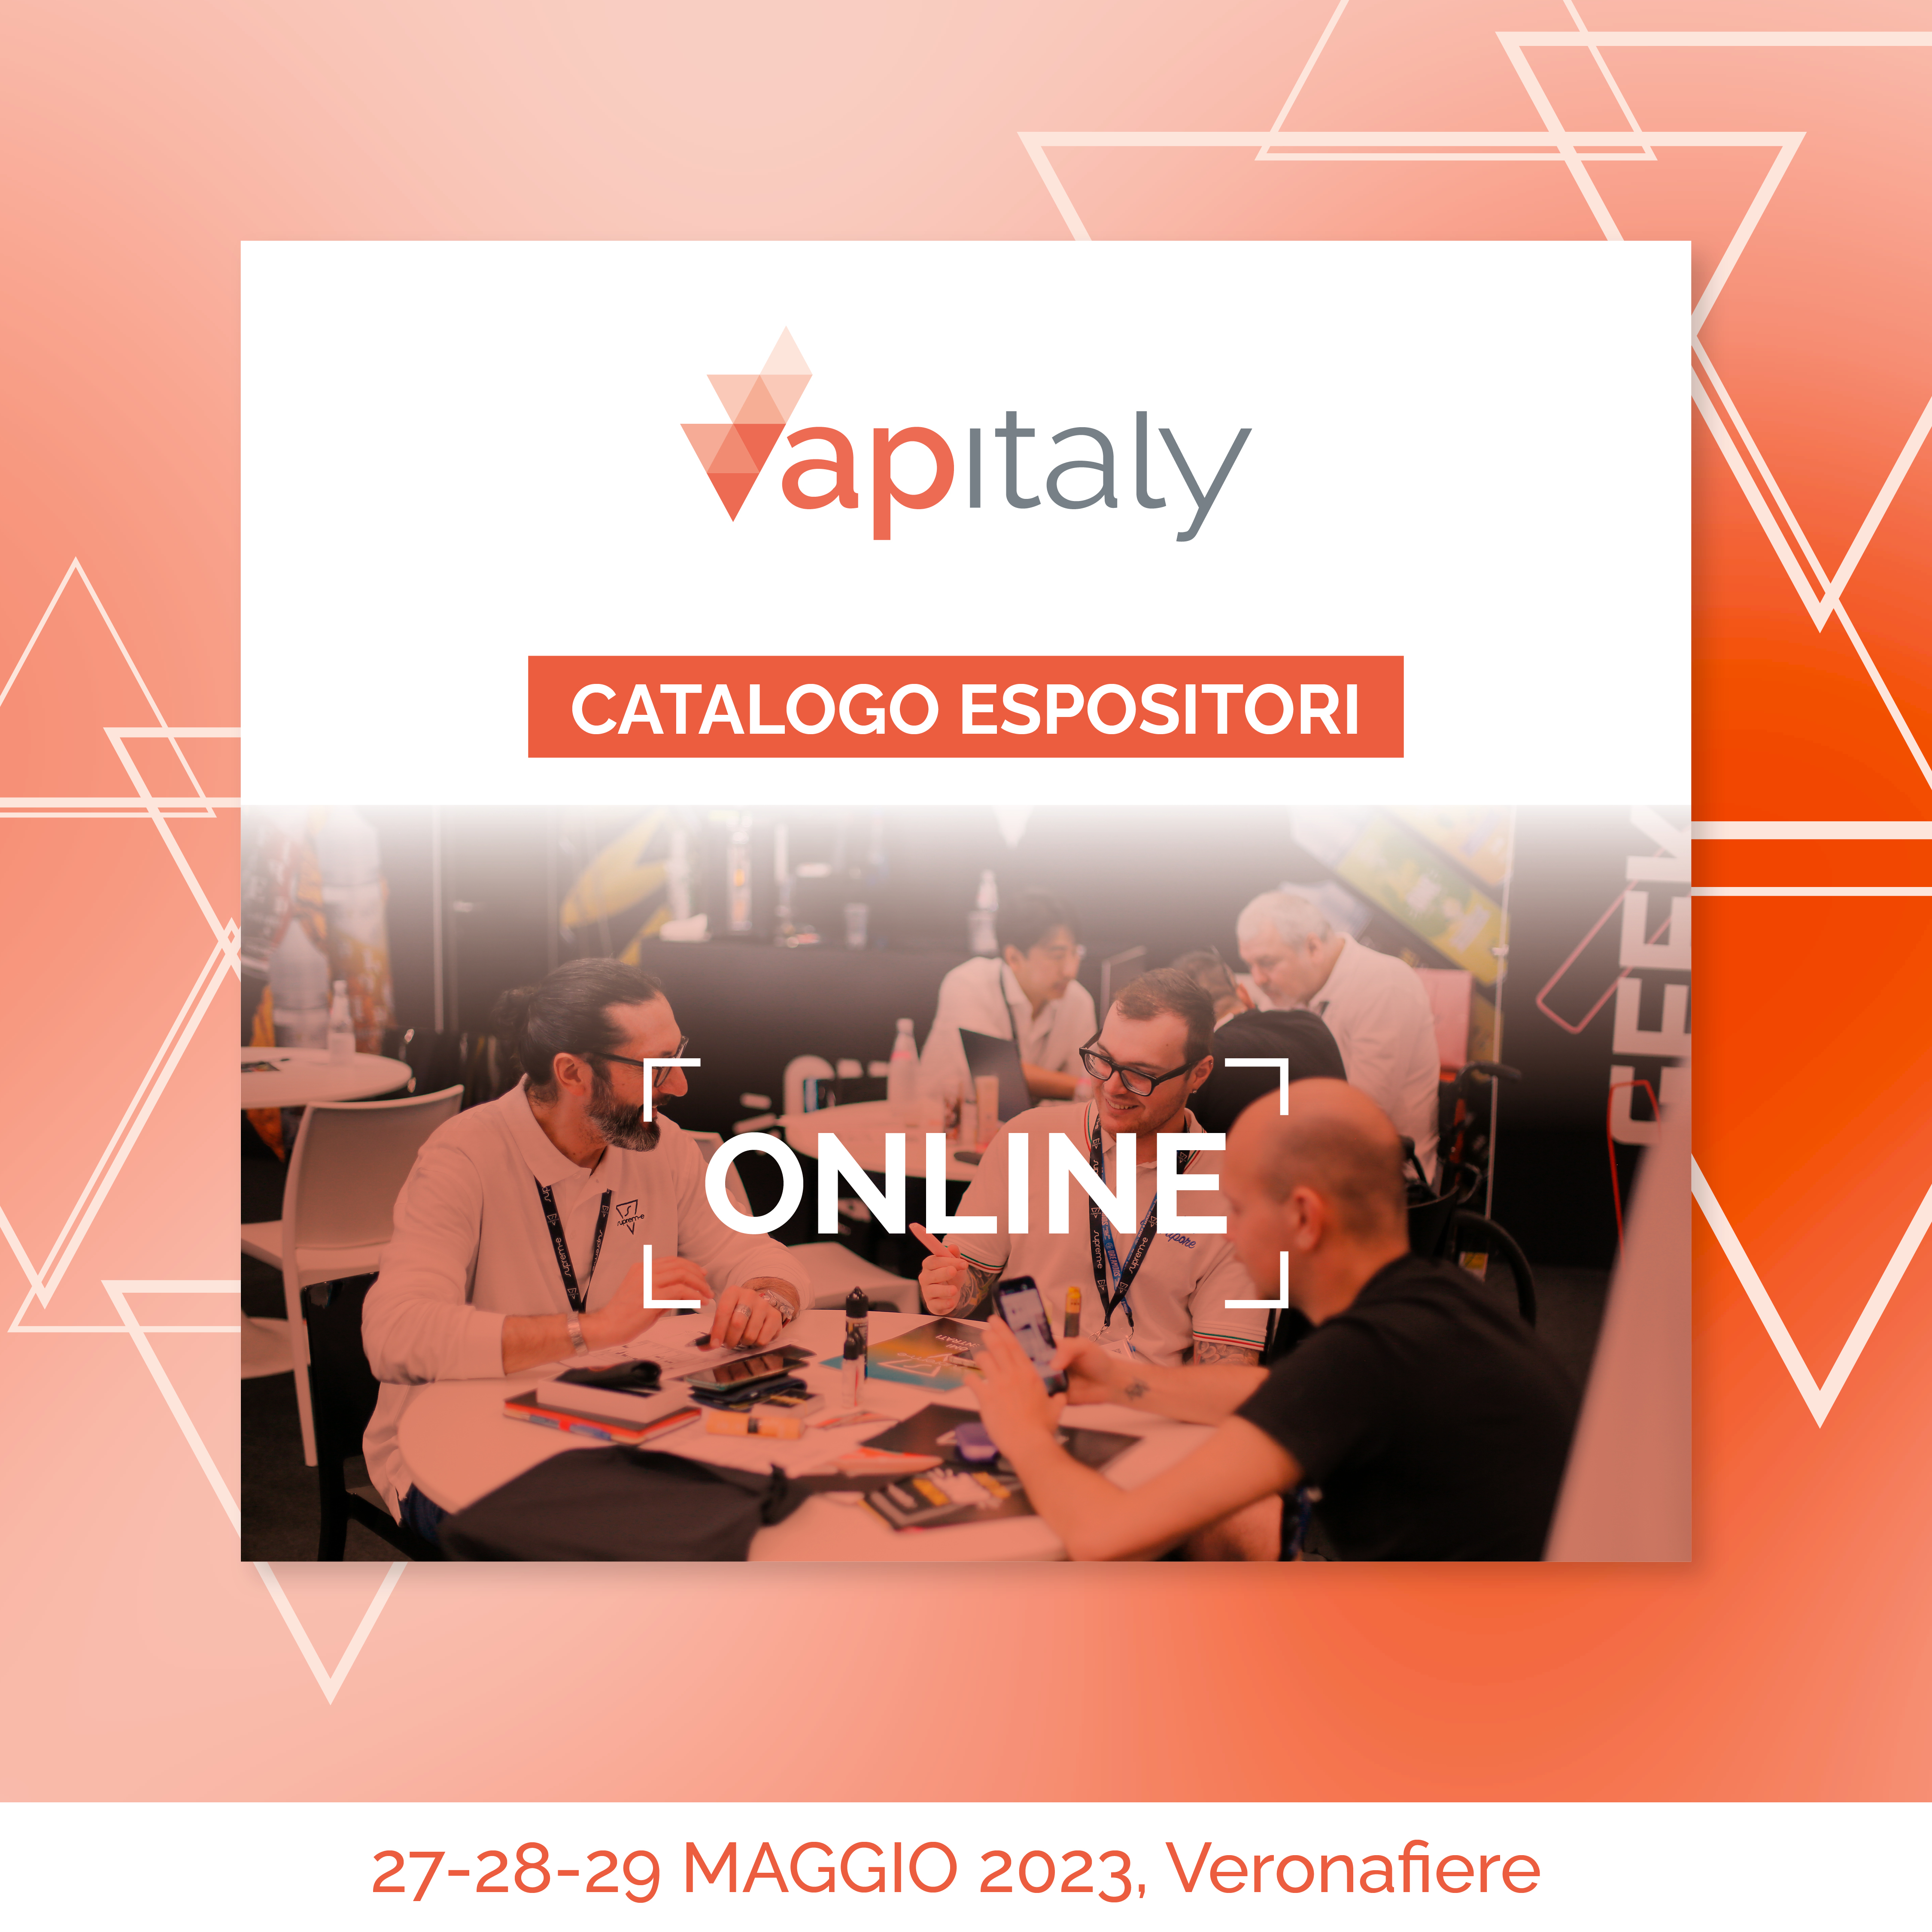 Vapitaly Exhibitors Catalogue 2023 now online